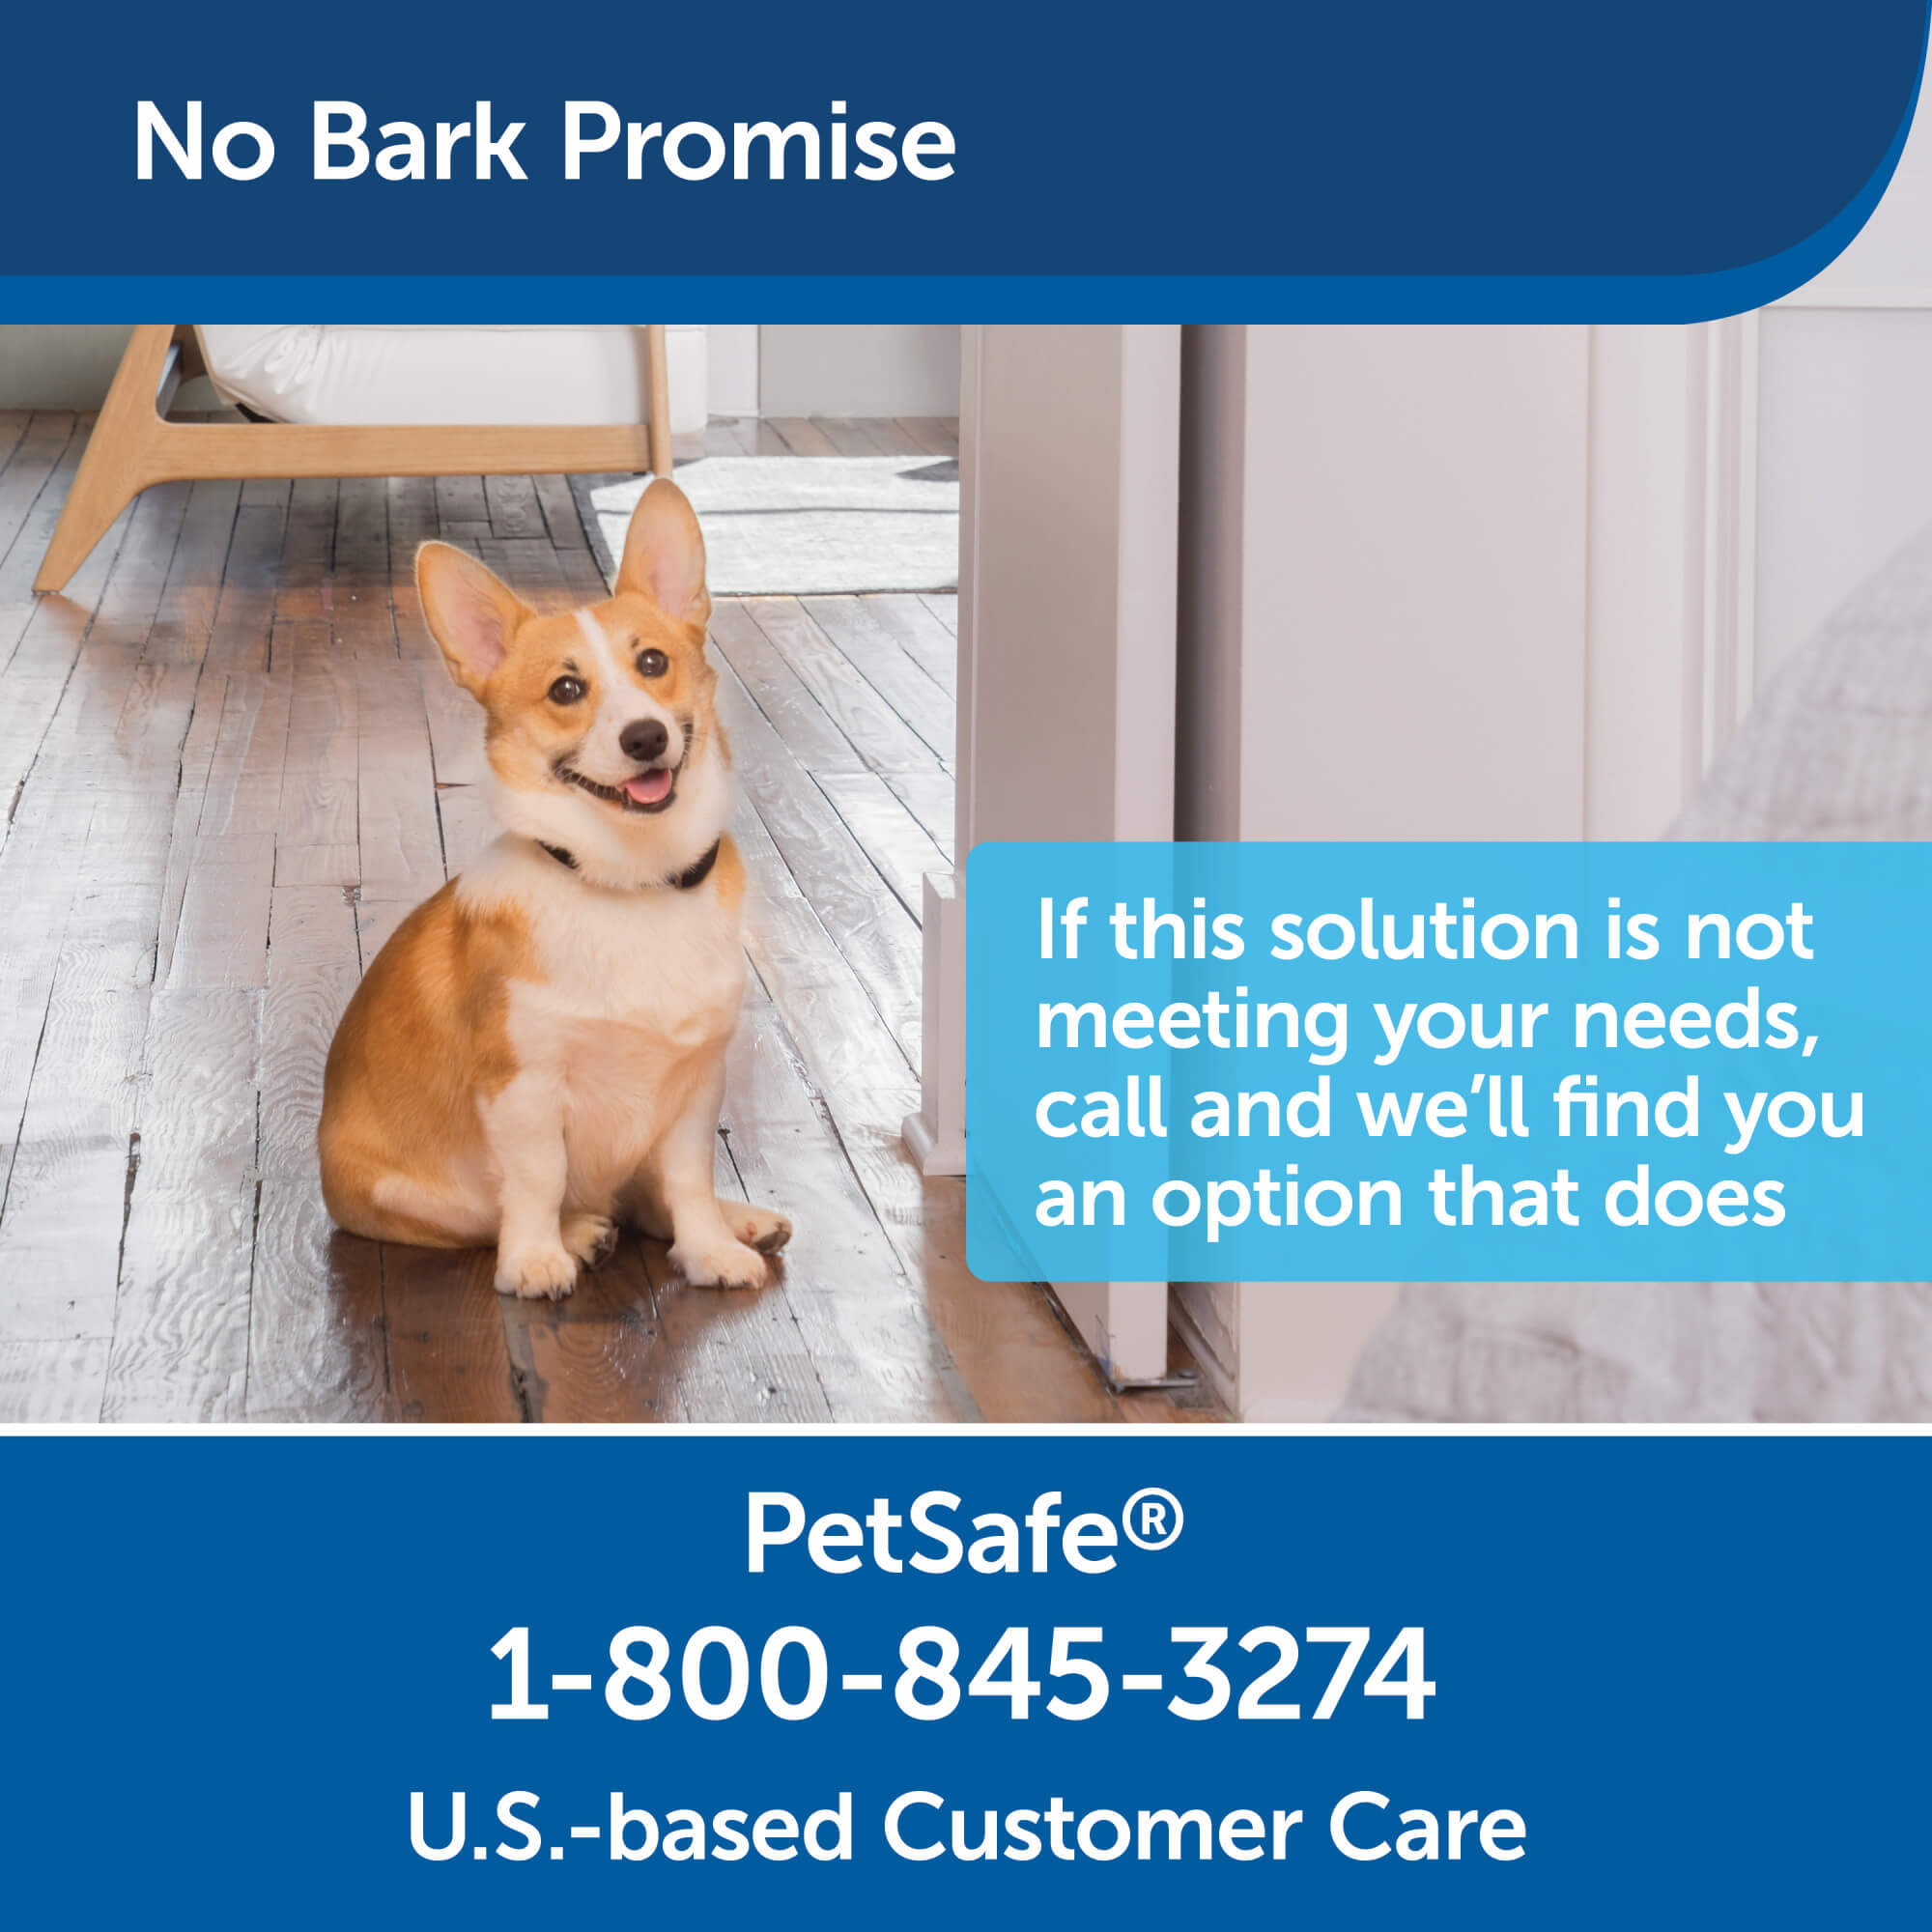 No bark promise